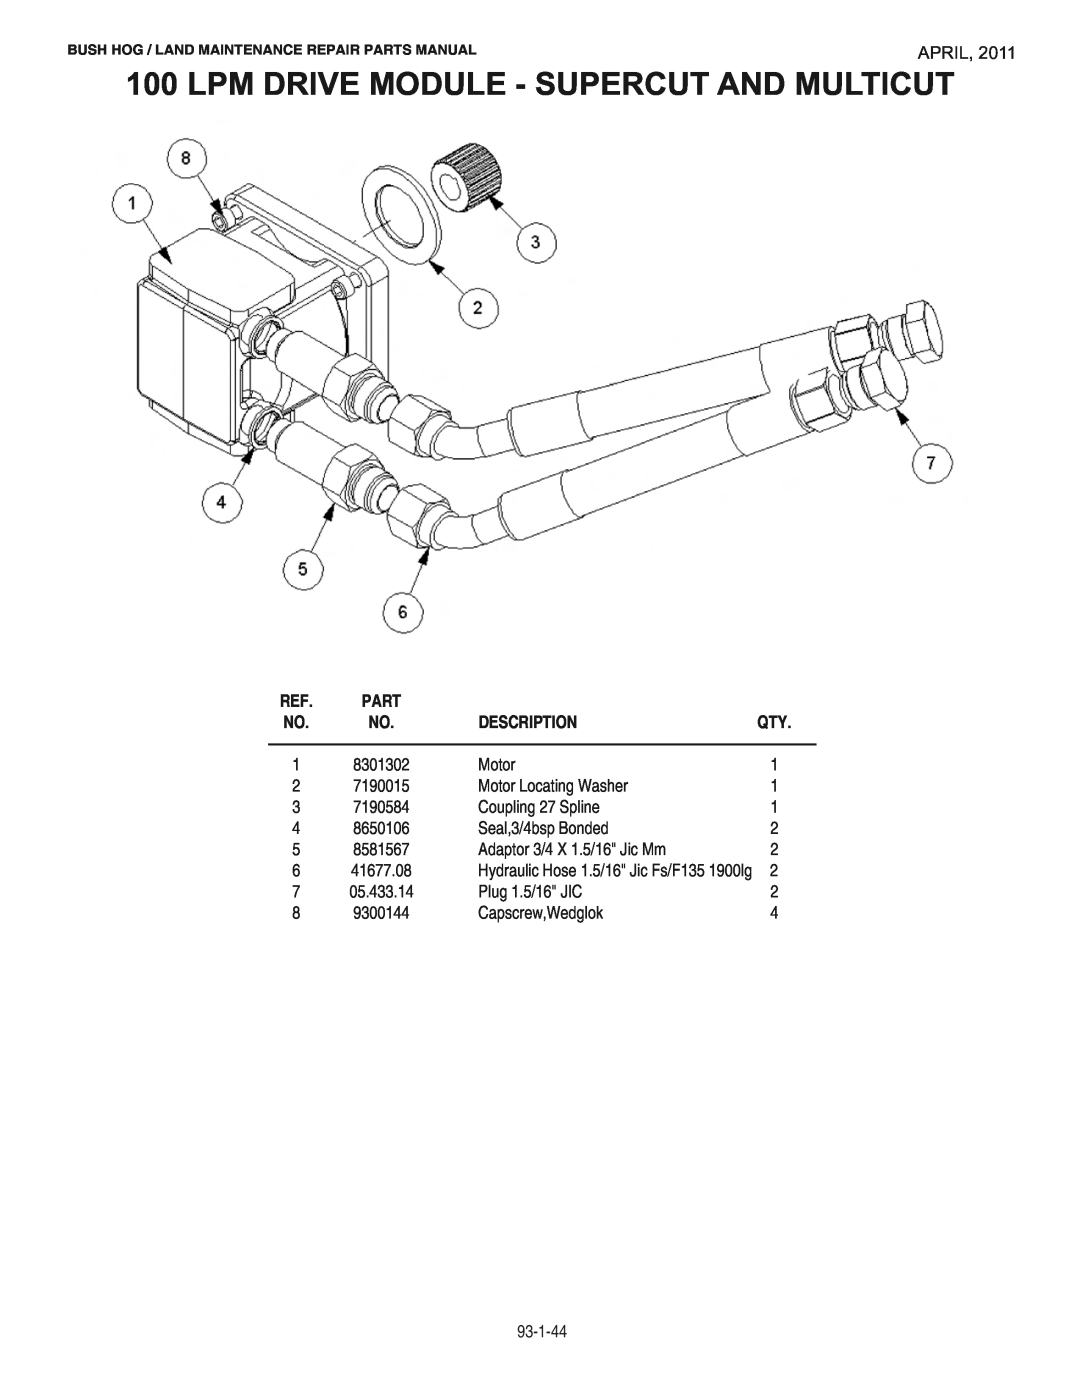 Bush Hog RMB1865E manual Lpm Drive Module - Supercut And Multicut, April, Description, Part 